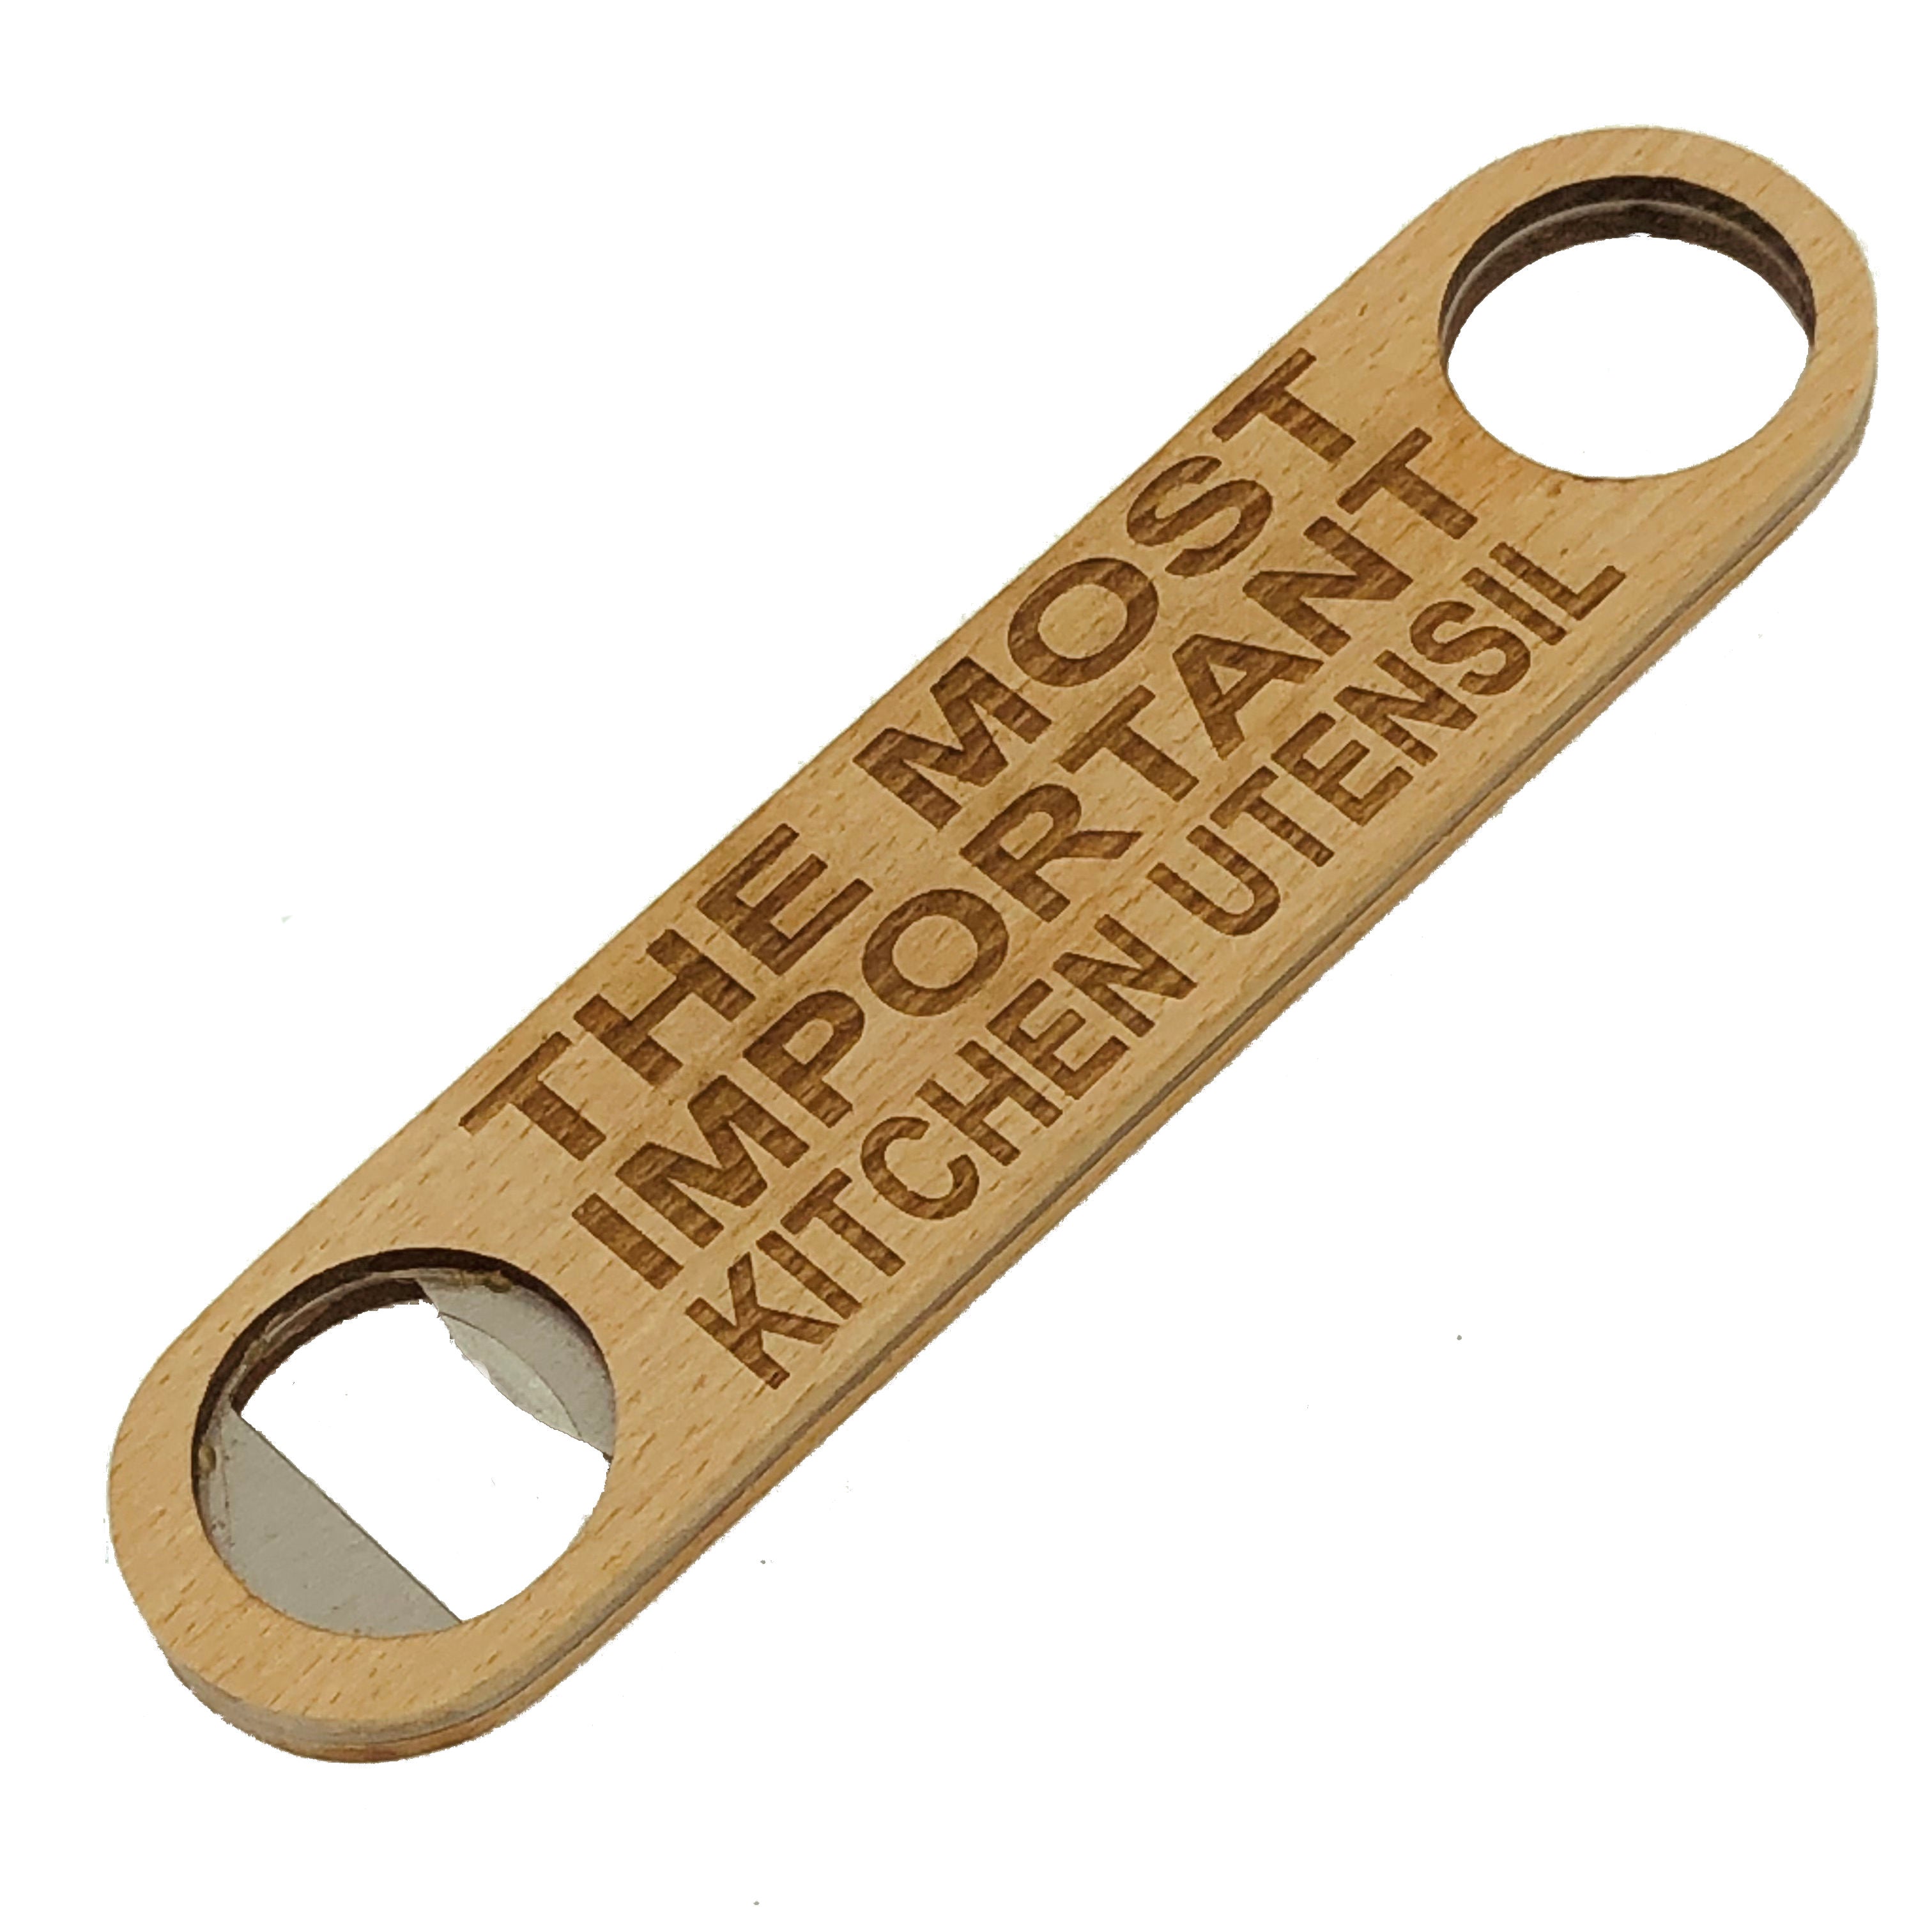 Wooden bottle opener gift - the most important kitchen utensil